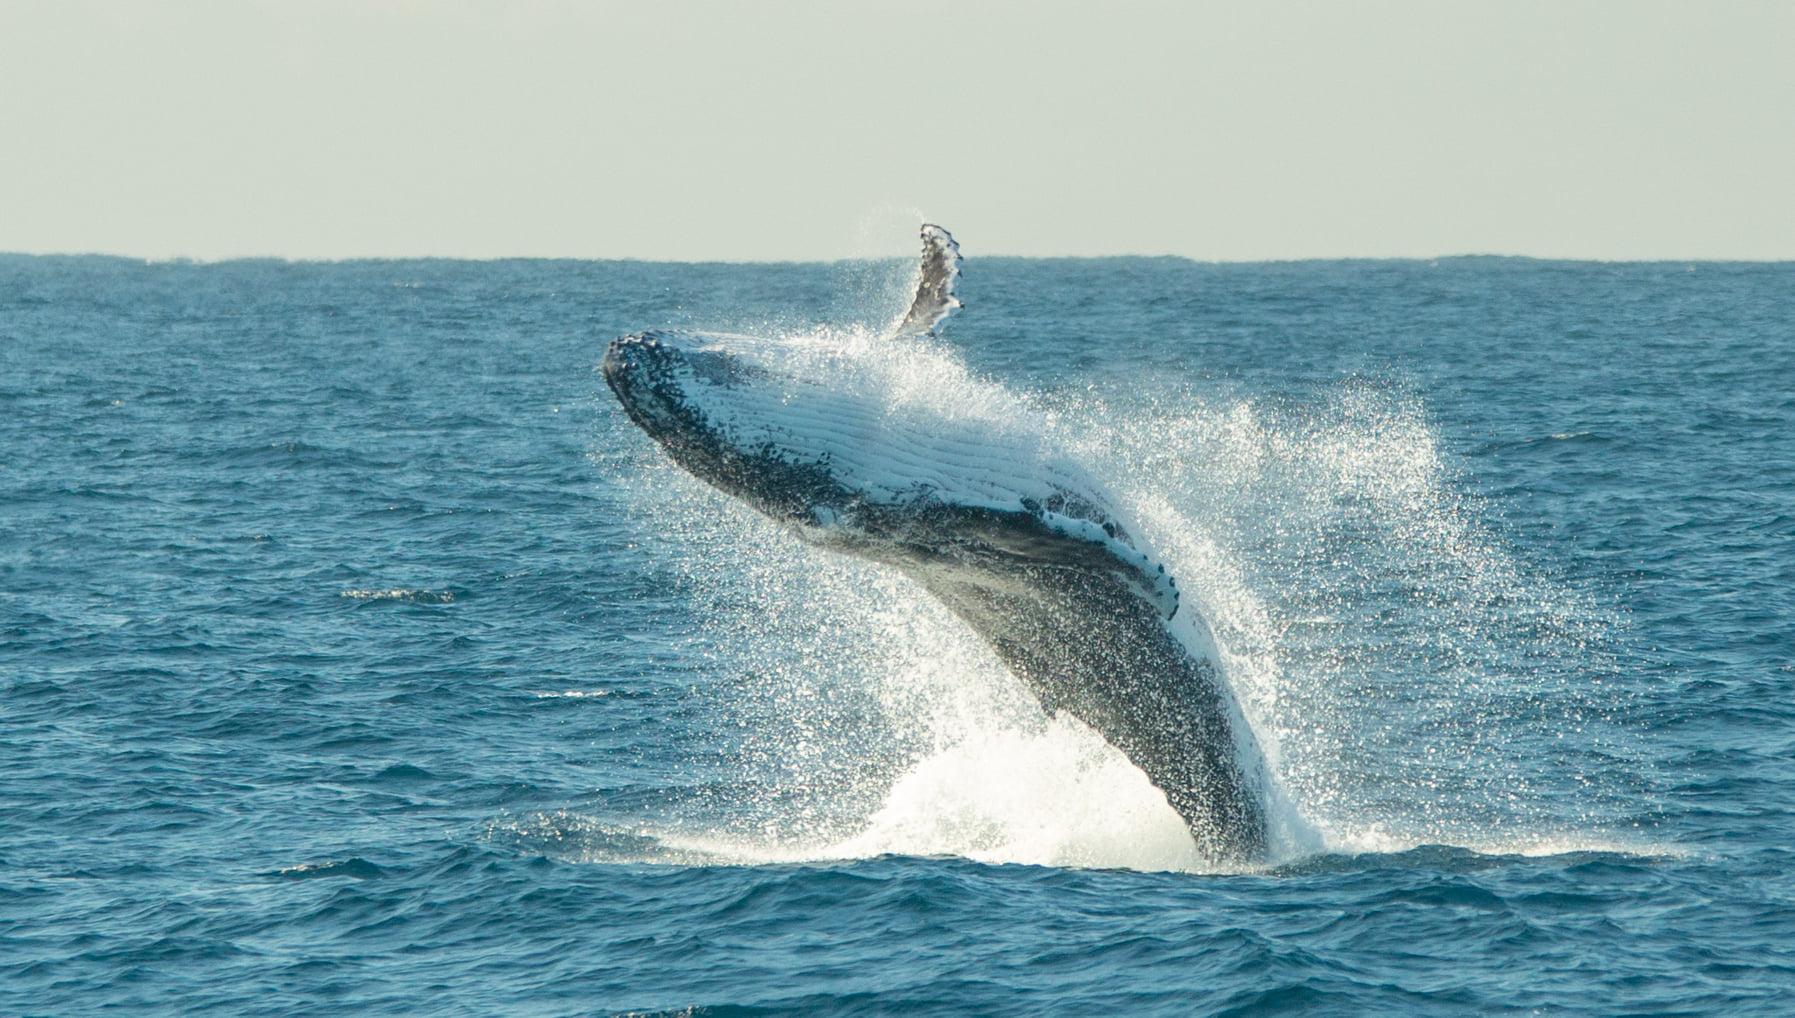 座头鲸 (© Philip Thurston/Getty Images) @20230608 | NiceBing 必应美图 - 精彩世界,一触即发